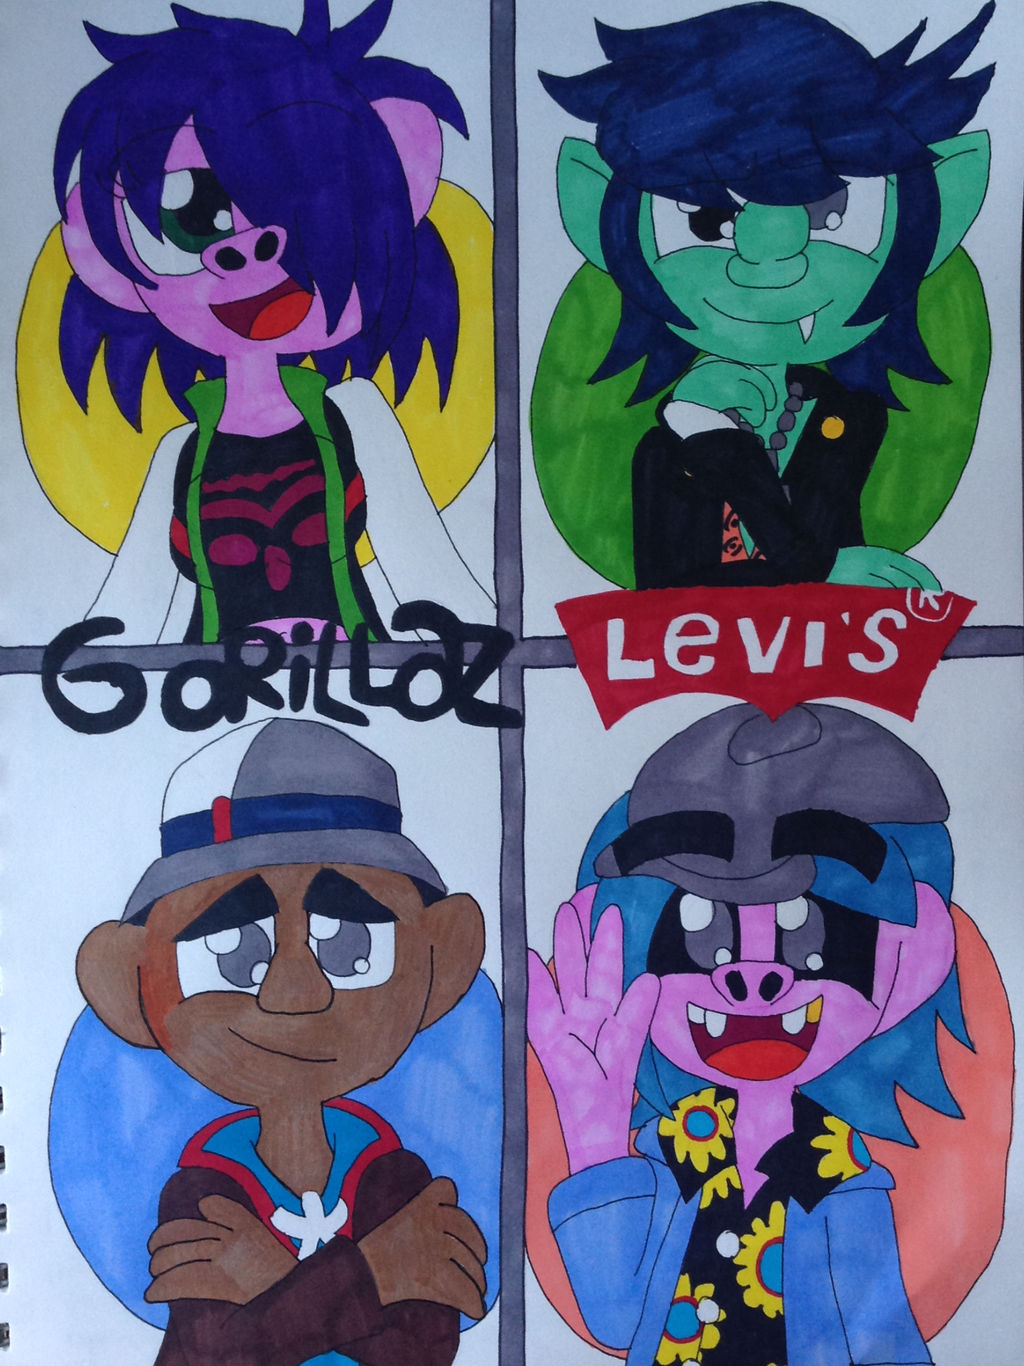 Gorillaz X Levi's by puresthope125 on DeviantArt